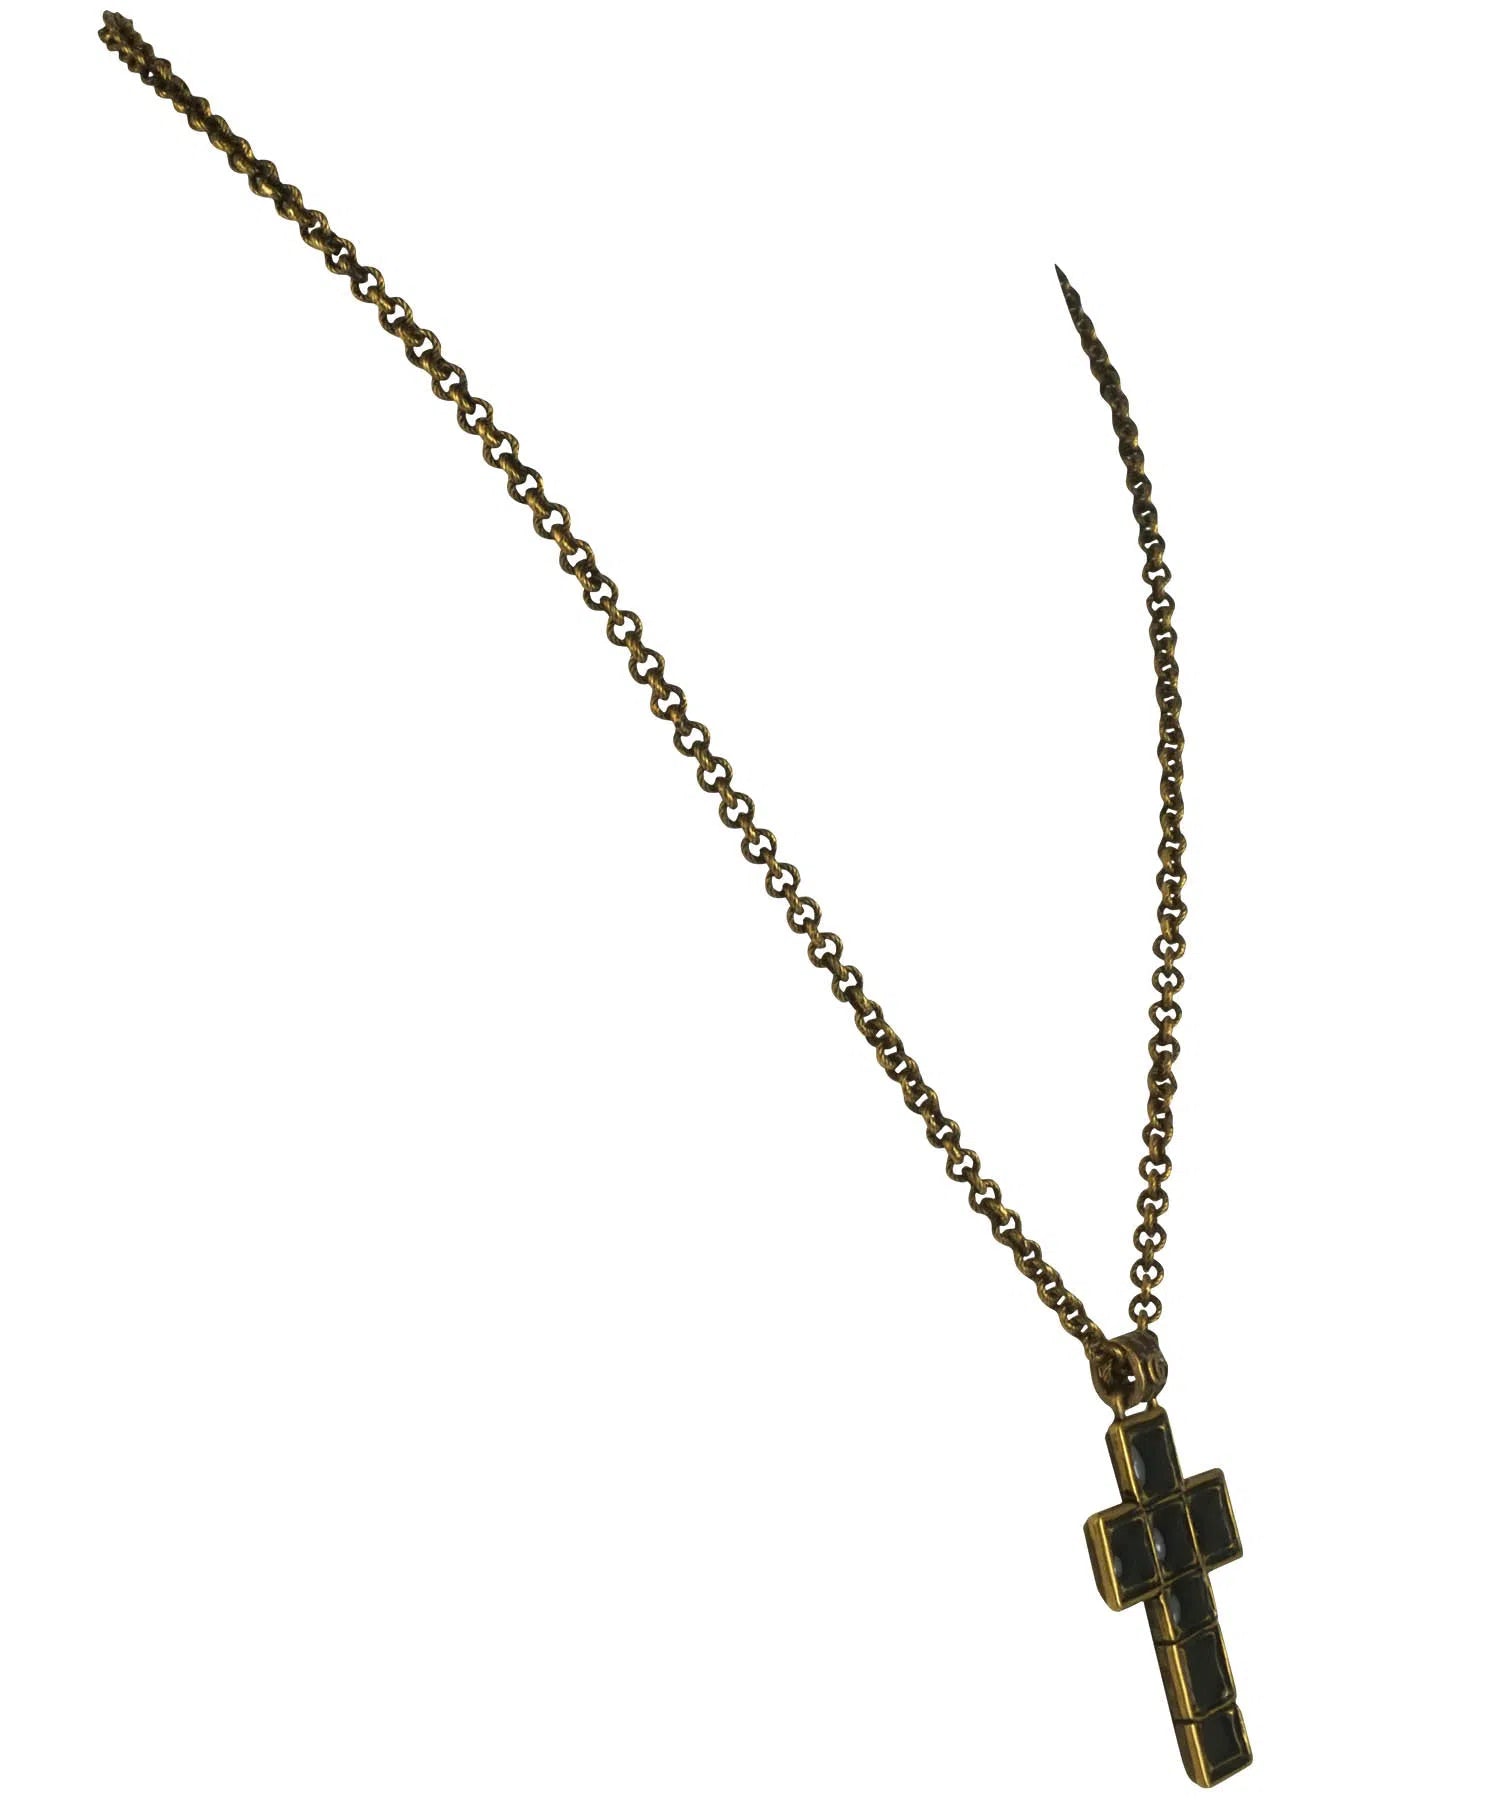 Gucci Small Glass Cross Pendant Necklace